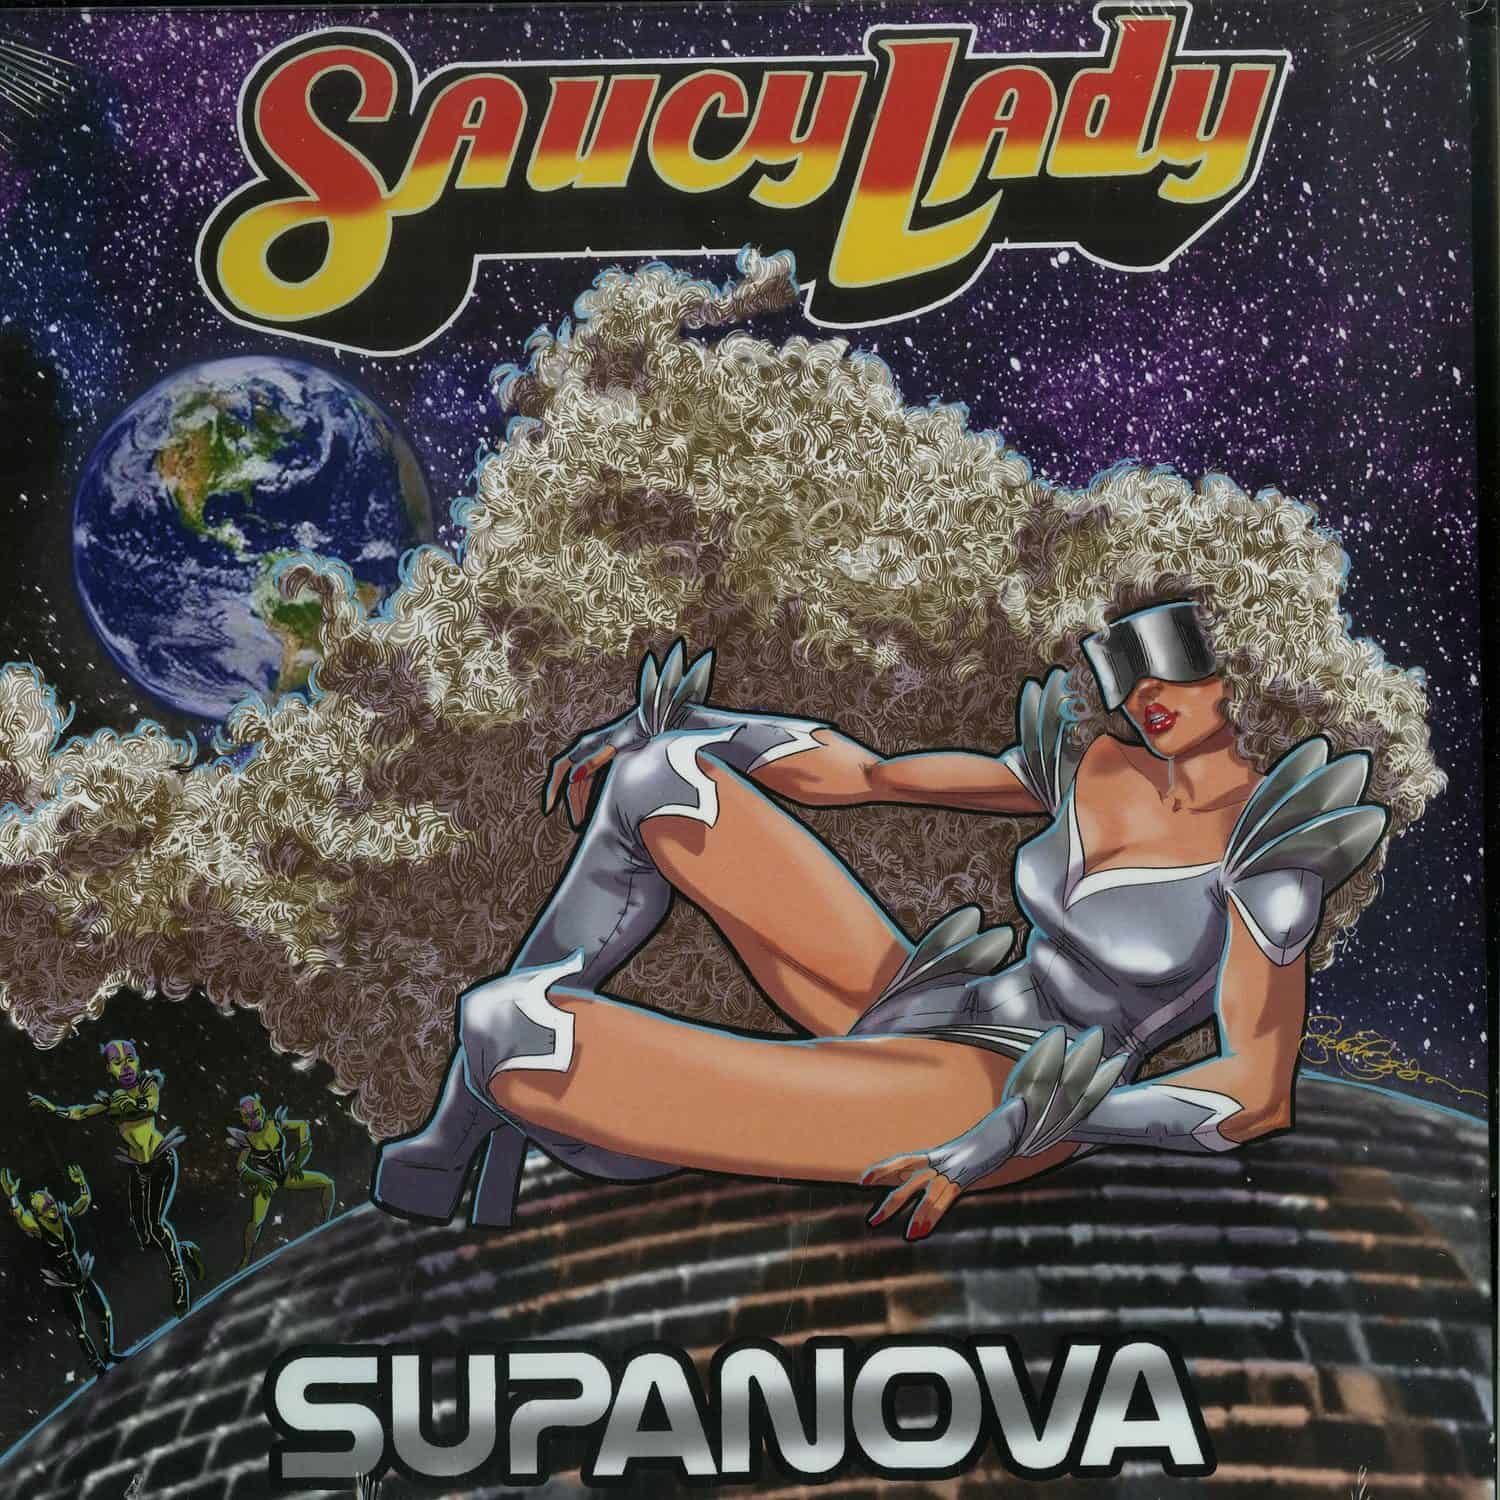 Saucy Lady - SUPANOVA